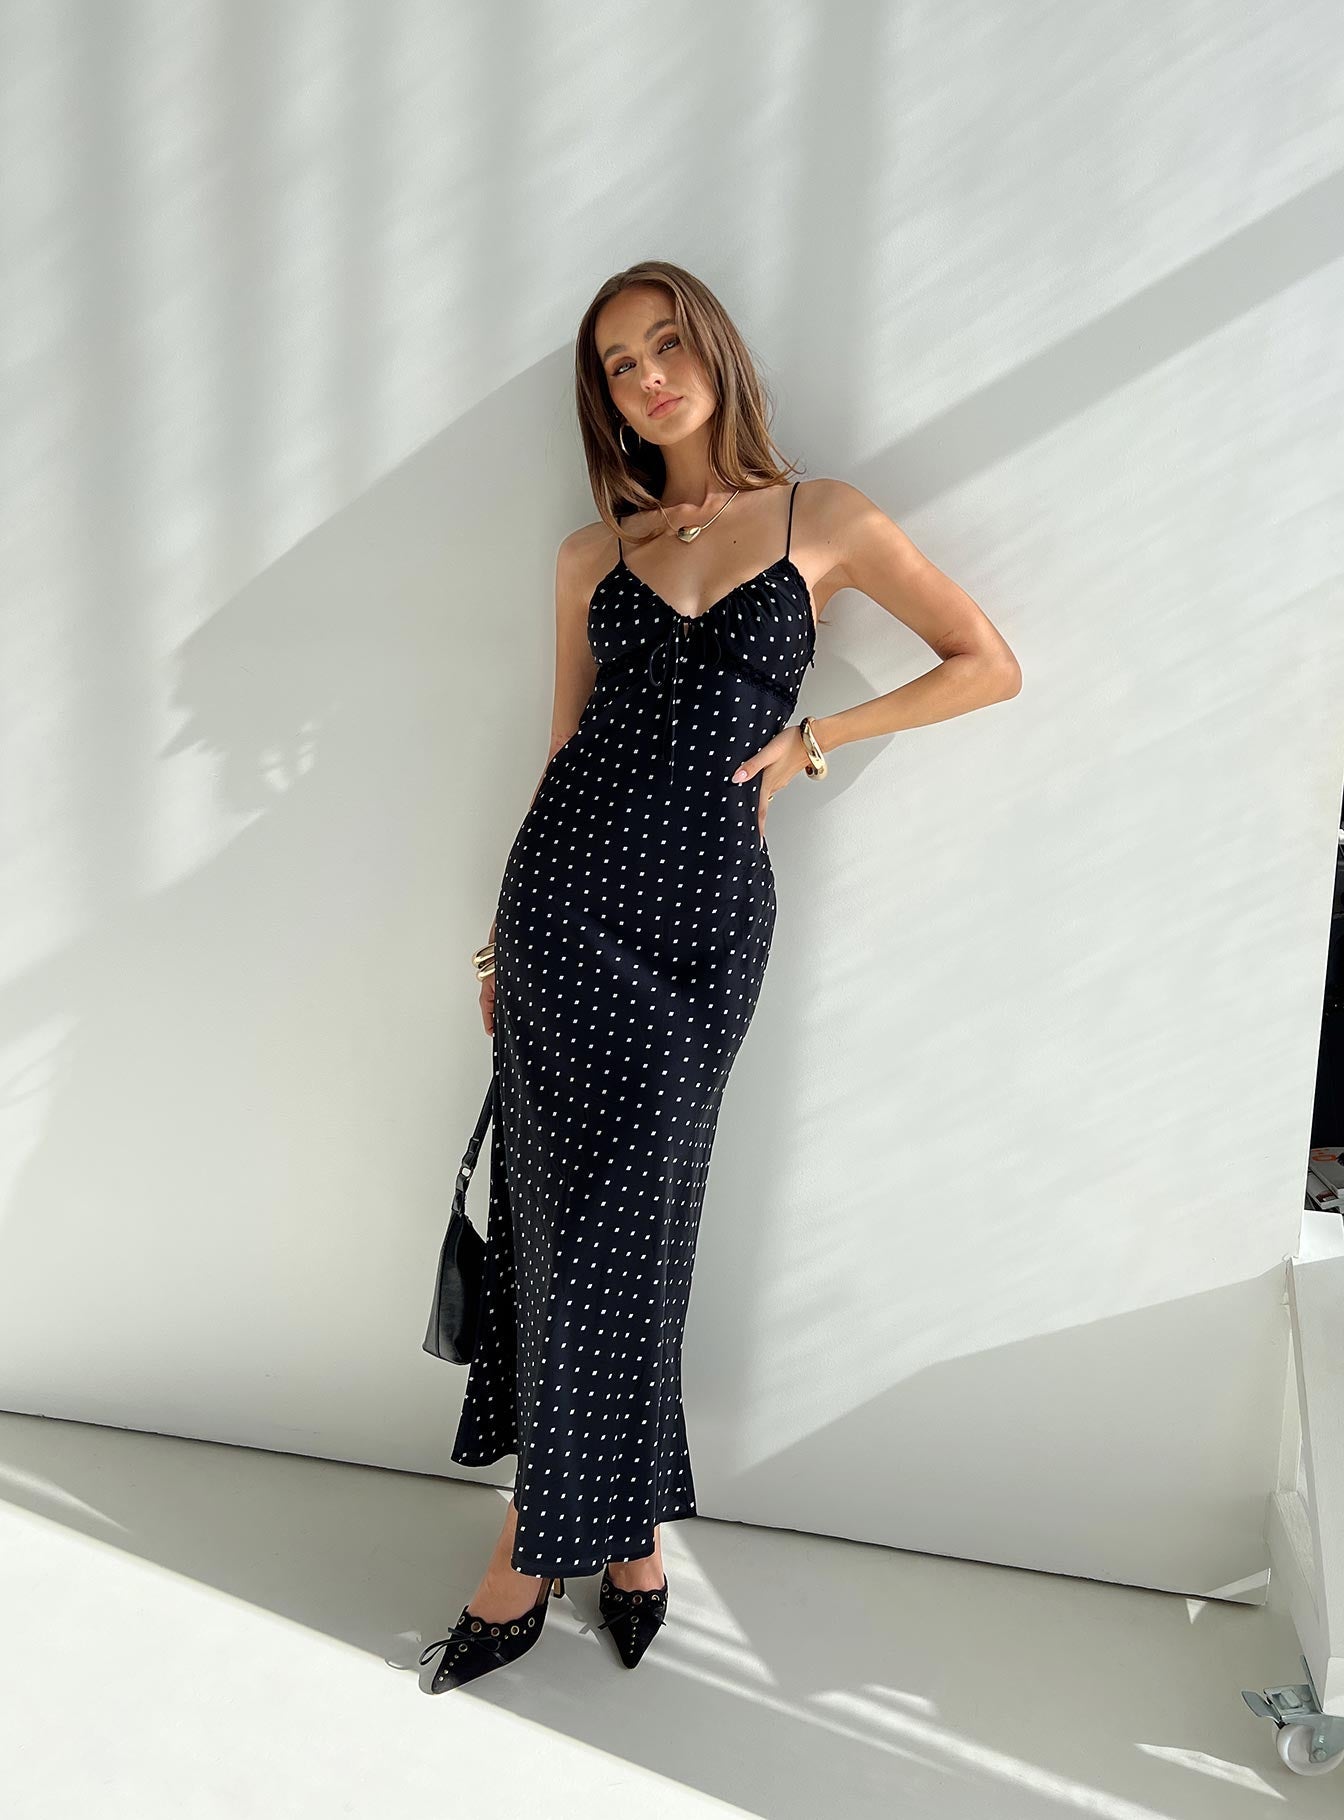 Shop Formal Dress - Emily Maxi Dress Black Polka Dot third image